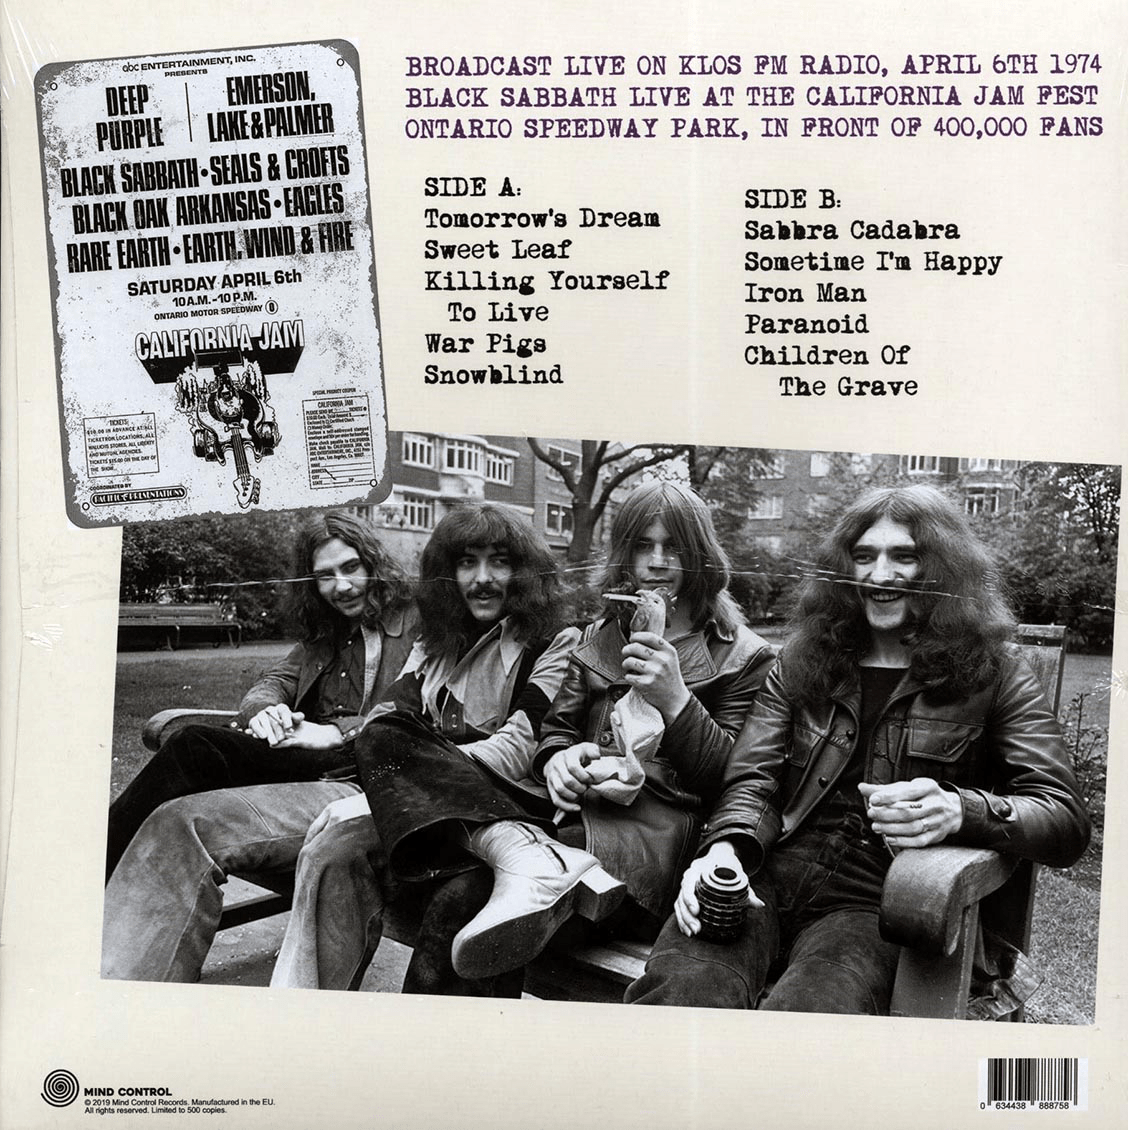 BLACK SABBATH: Live from The Ontario Speedway Park, April 6th 1974 / KLOS-FM Broadcast LP (purple vinyl, only 500 copies!)